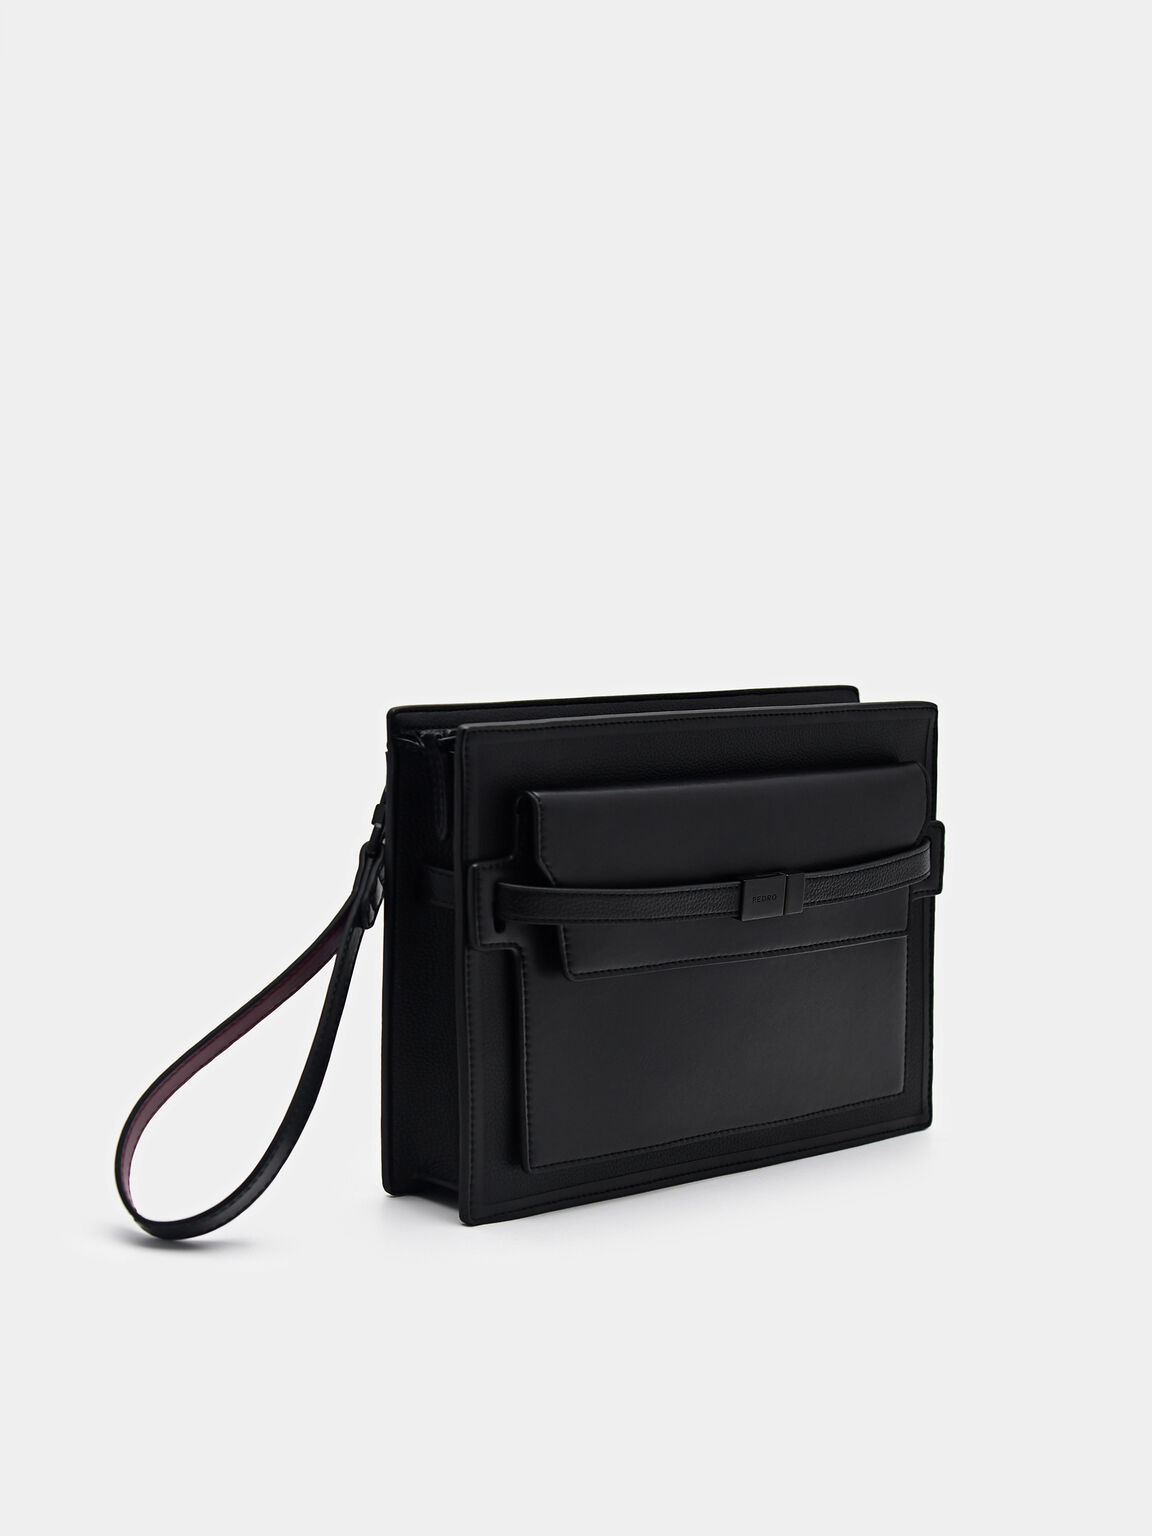 Hopper Clutch Bag, Black